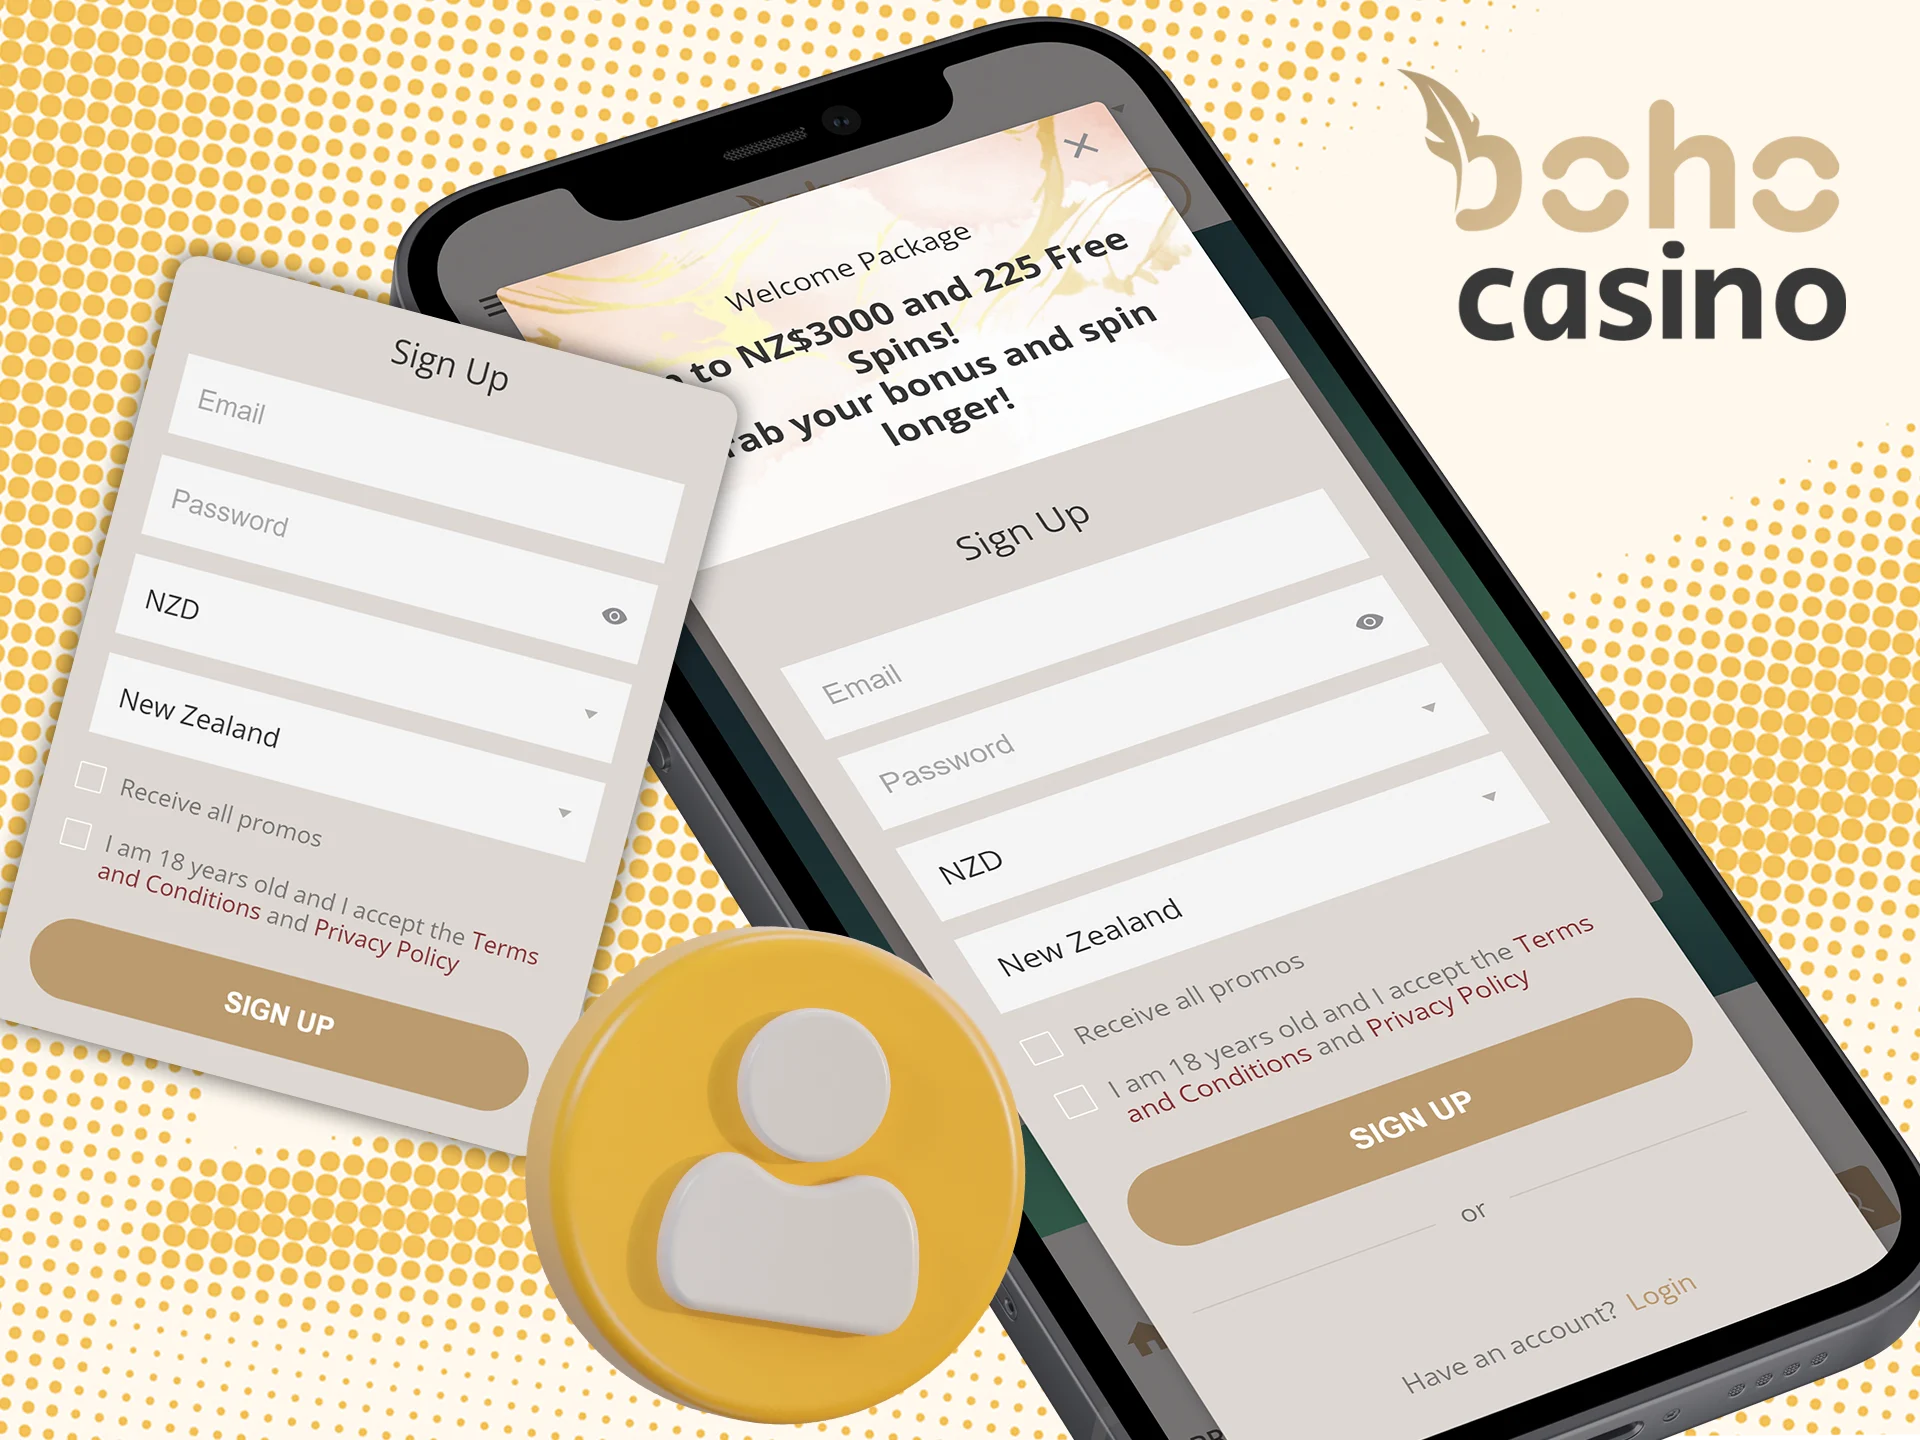 Sign up for Boho Casino app in a few easy steps.